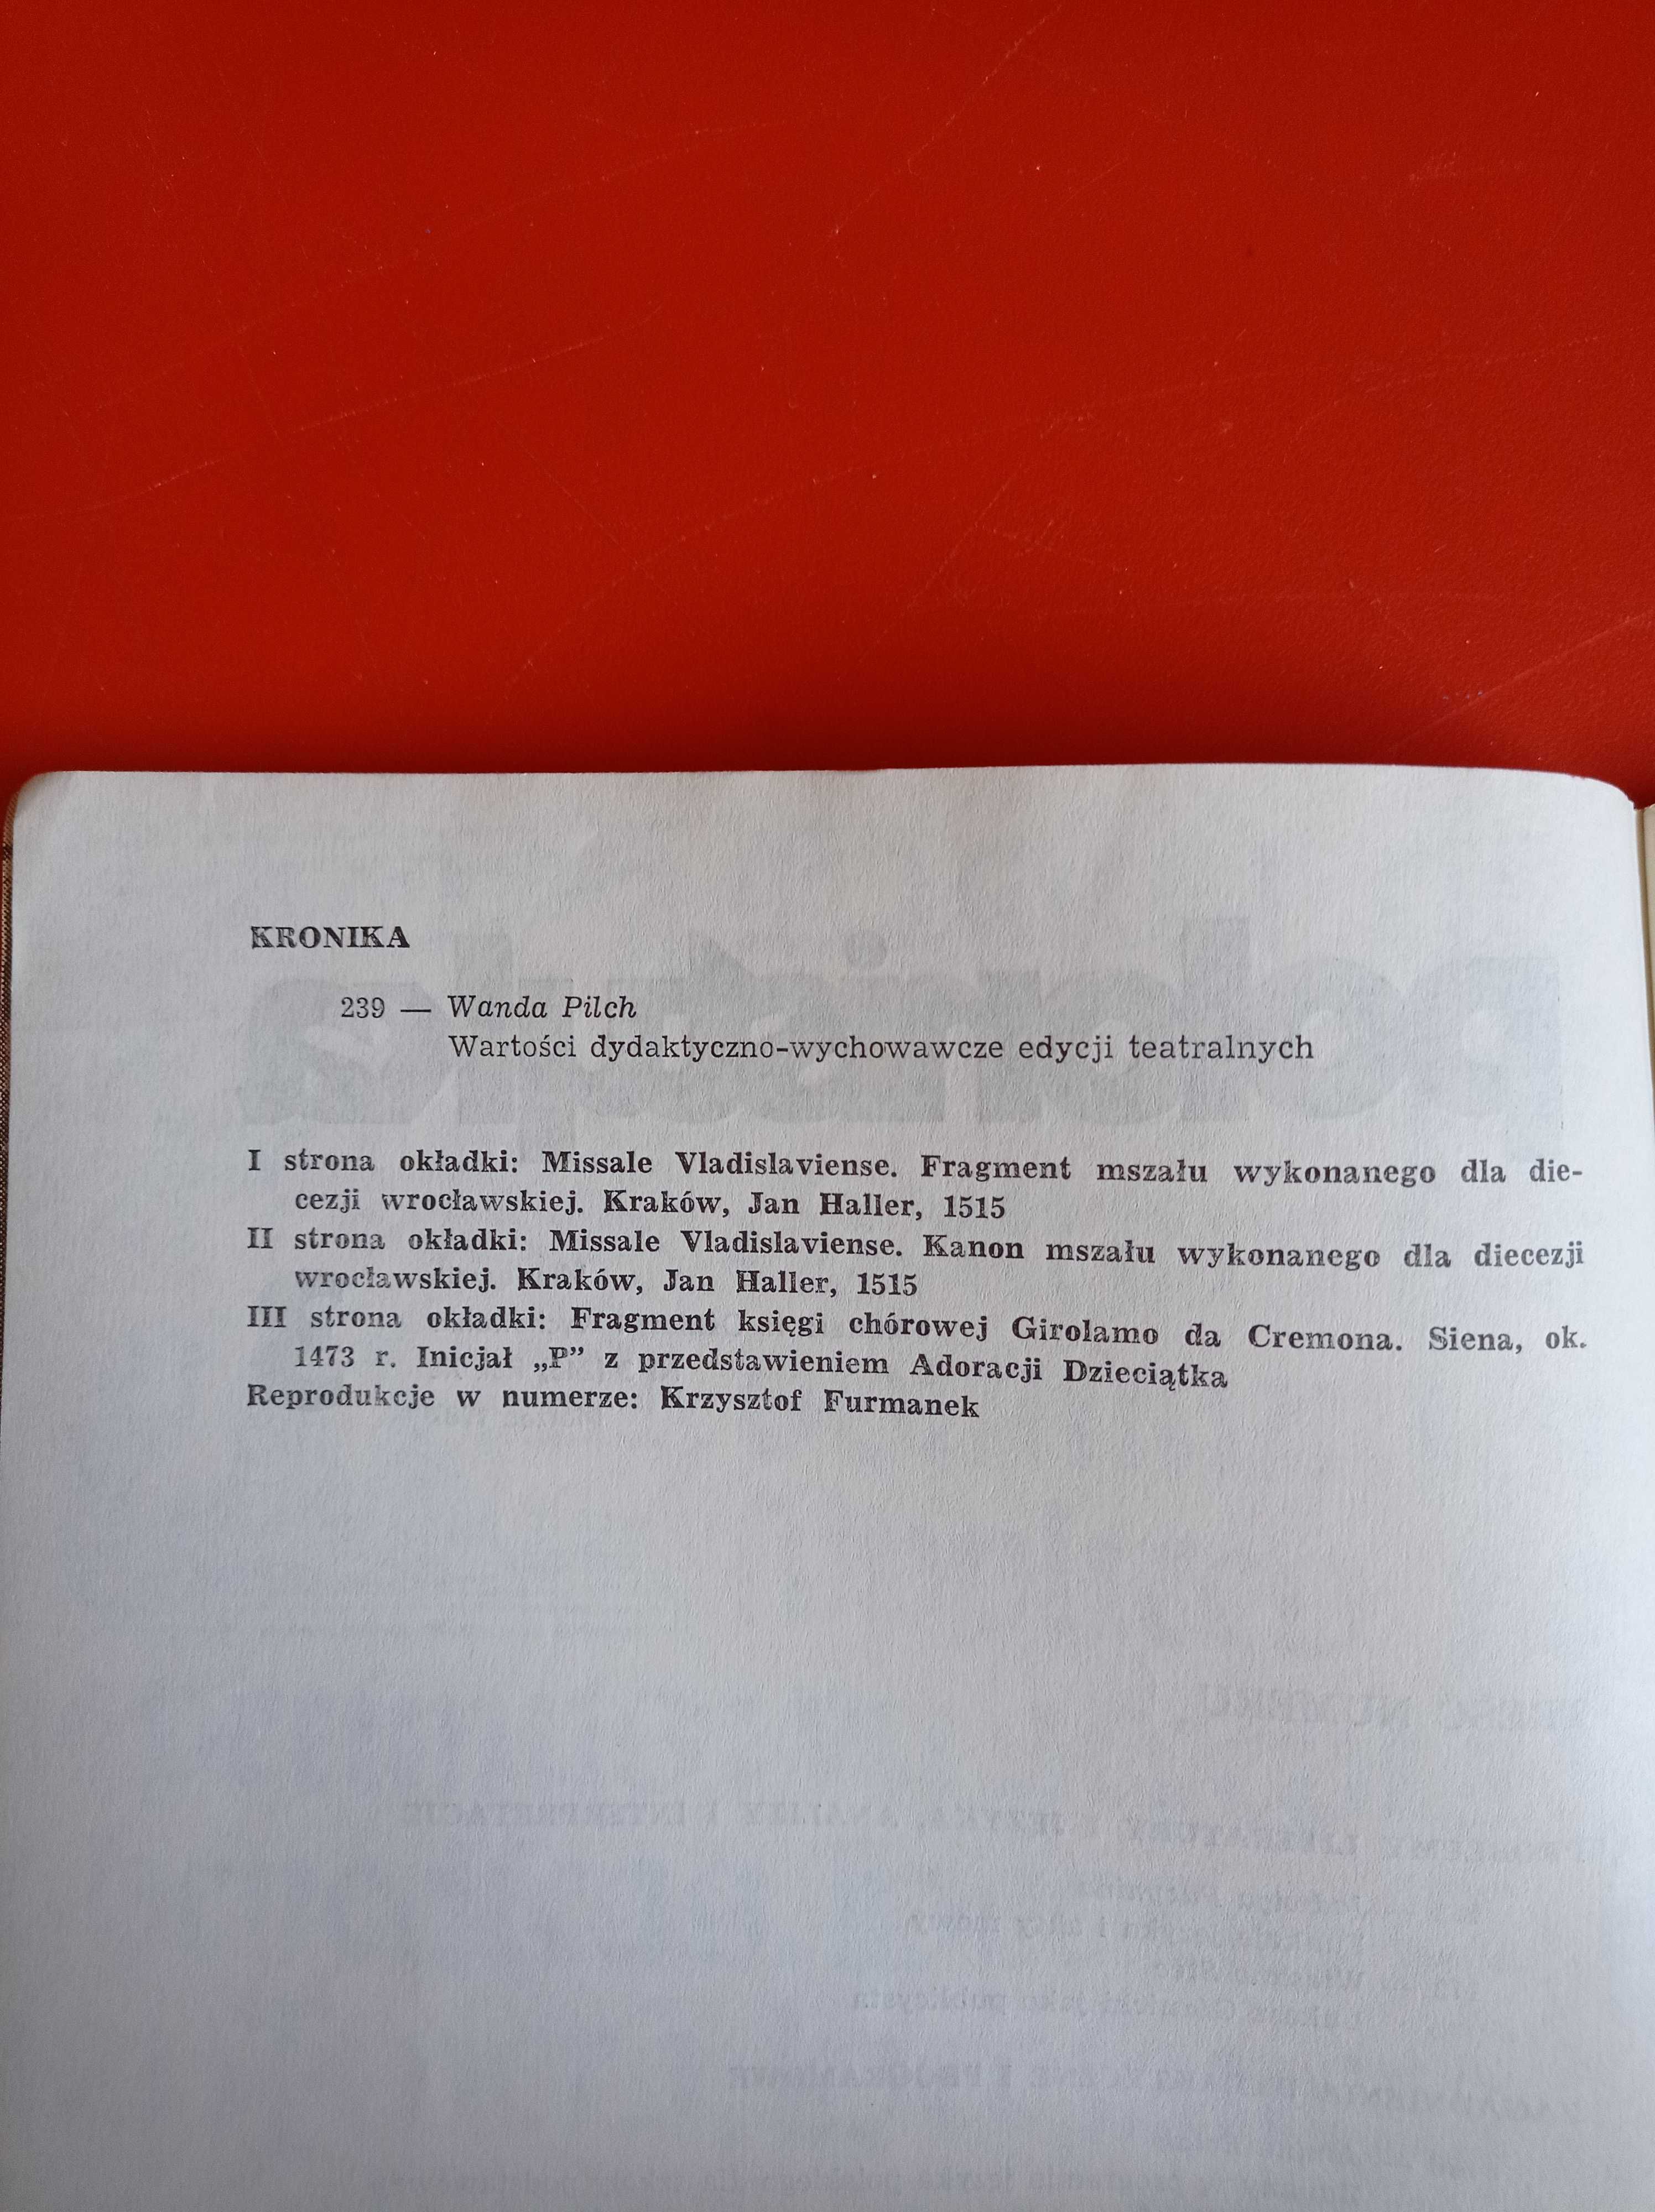 Polonistyka nr 3 (243) marzec 1987, WSiP